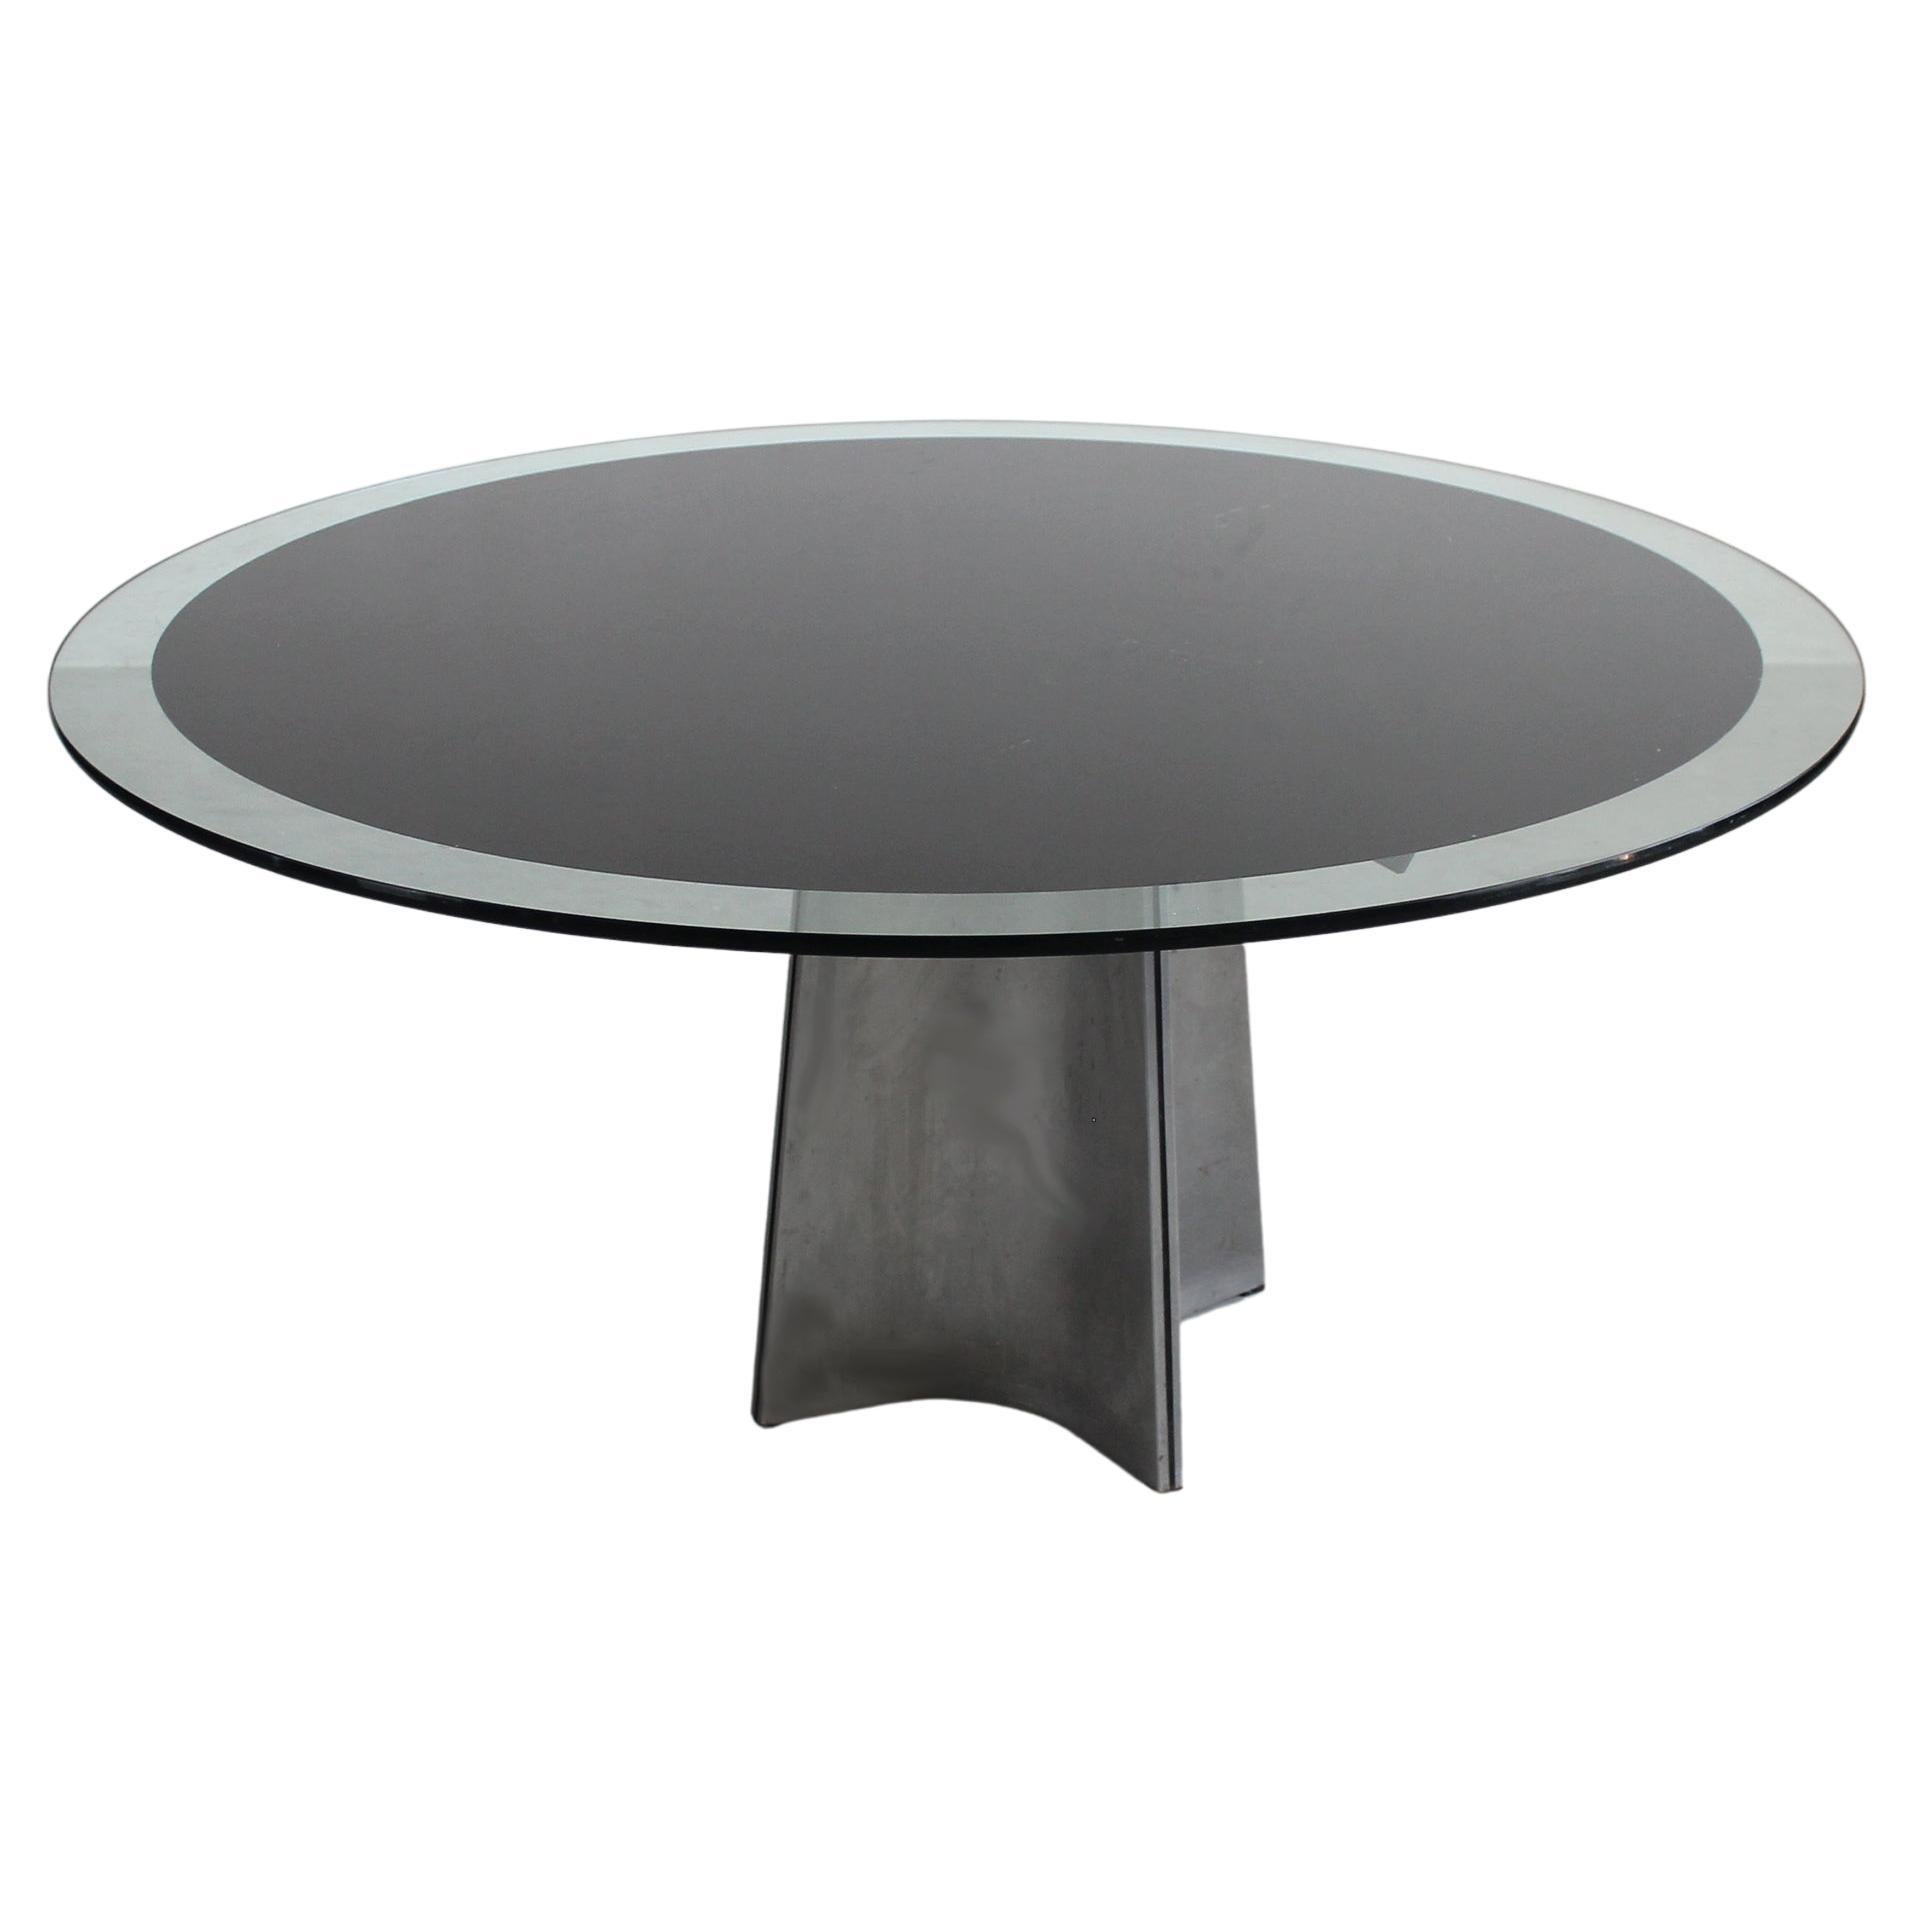 Luigi Saccardo Round Pedestal Table in Steel and Glass by Maison Jansen, 1970s